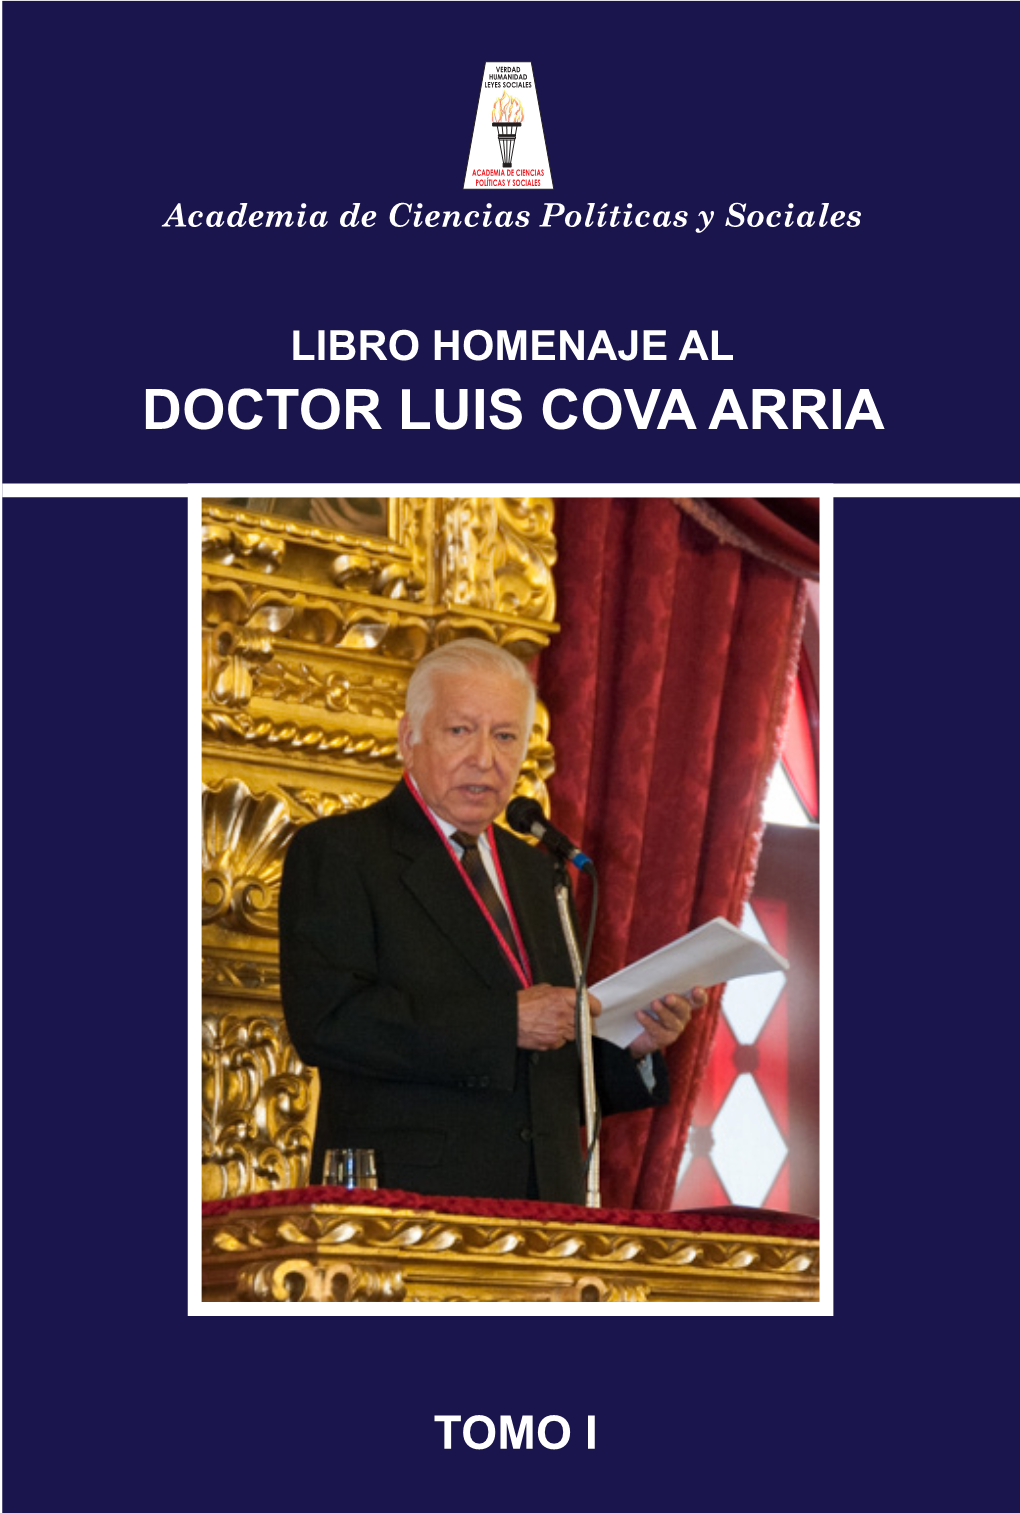 DOCTOR LUIS COVA ARRIA Tomo I